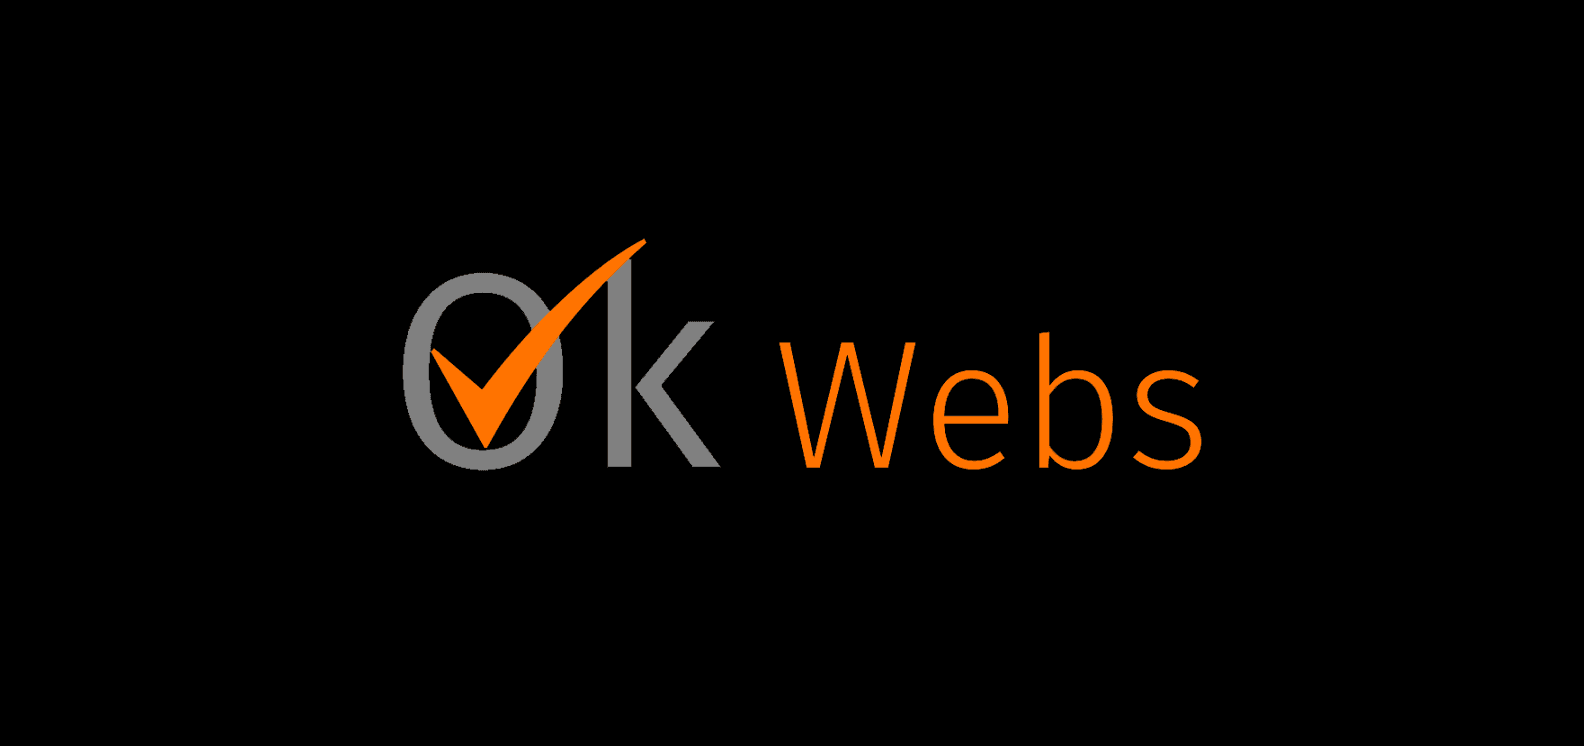 Product Web Hosting - Ok Webs - www.okwebs.net image